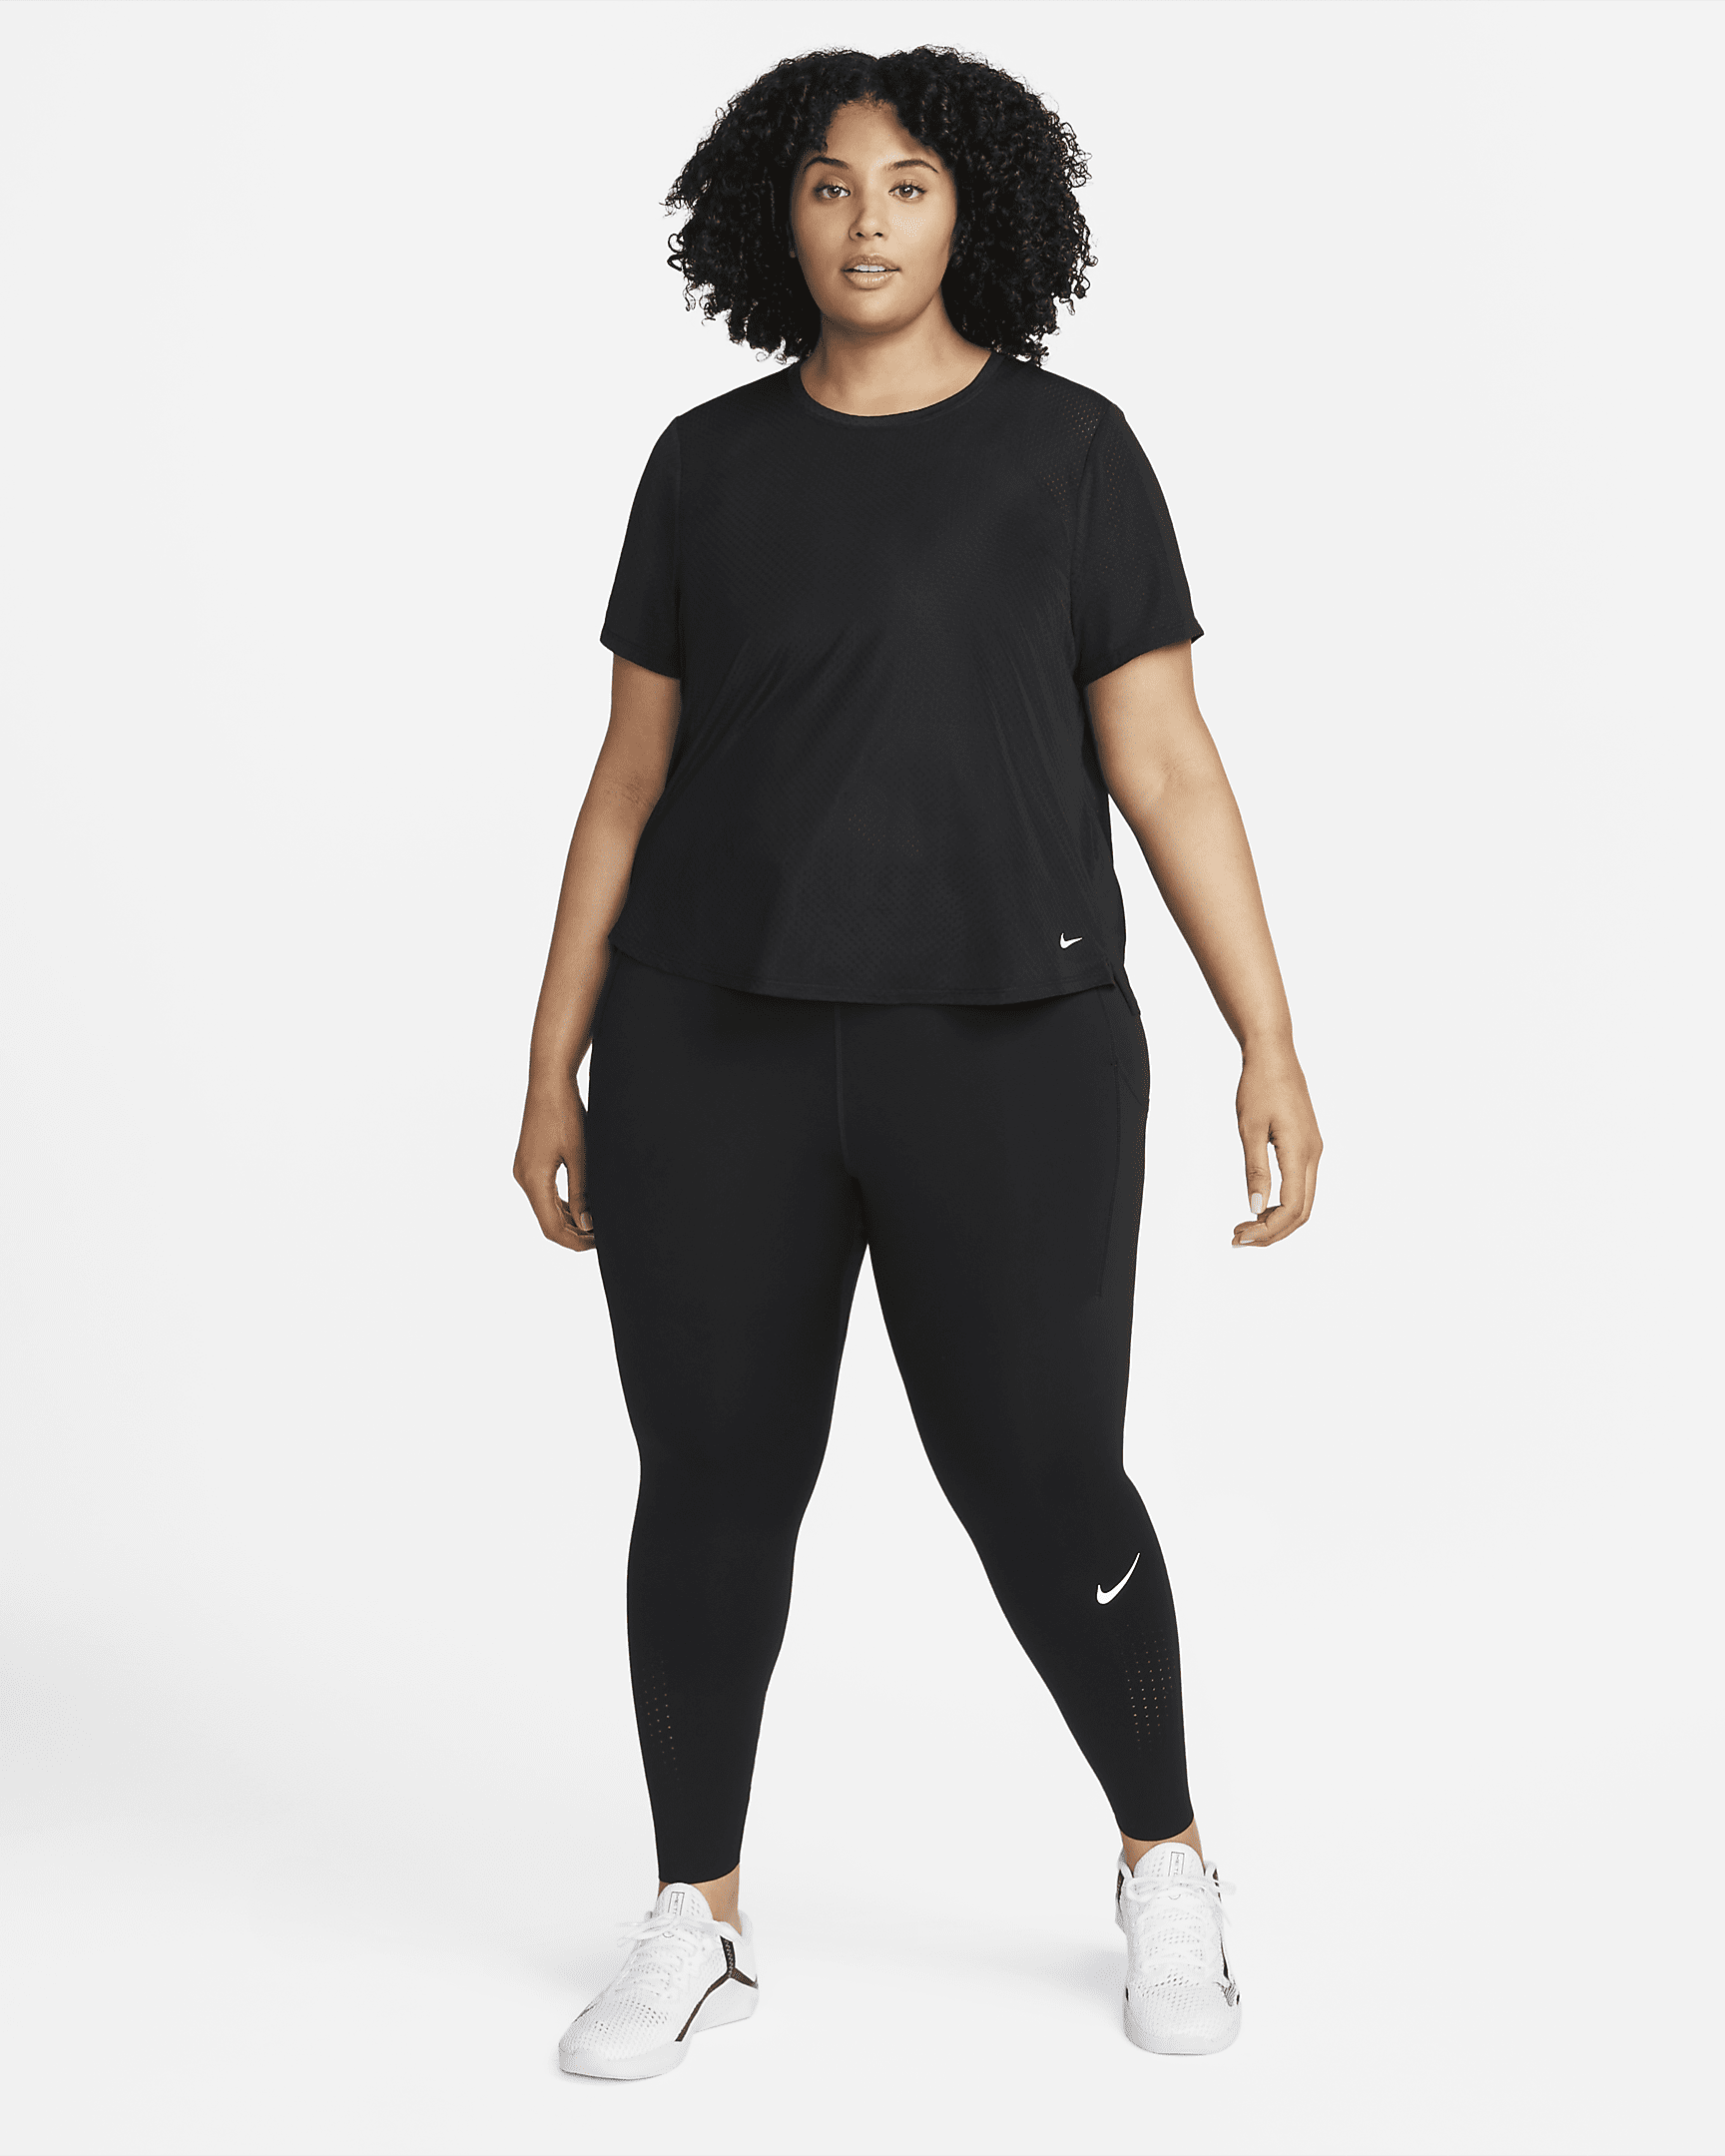 Nike Dri-FIT One Breathe Women's Short-Sleeve Training Top (Plus Size ...